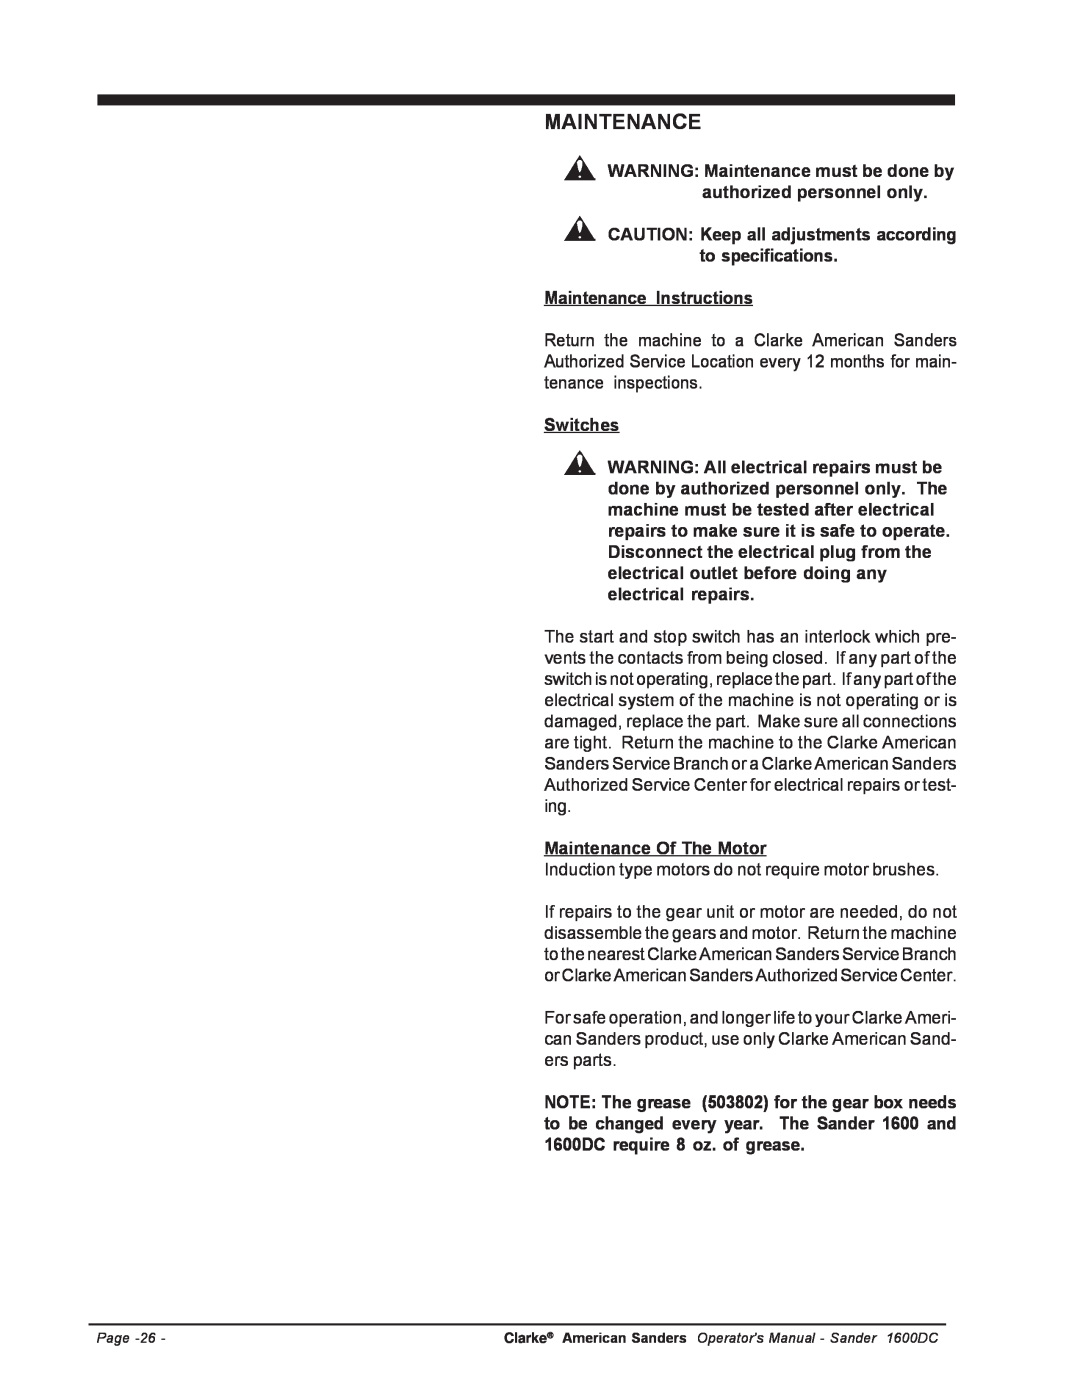 Nilfisk-ALTO C.A.V. 15 manual Maintenance Instructions 